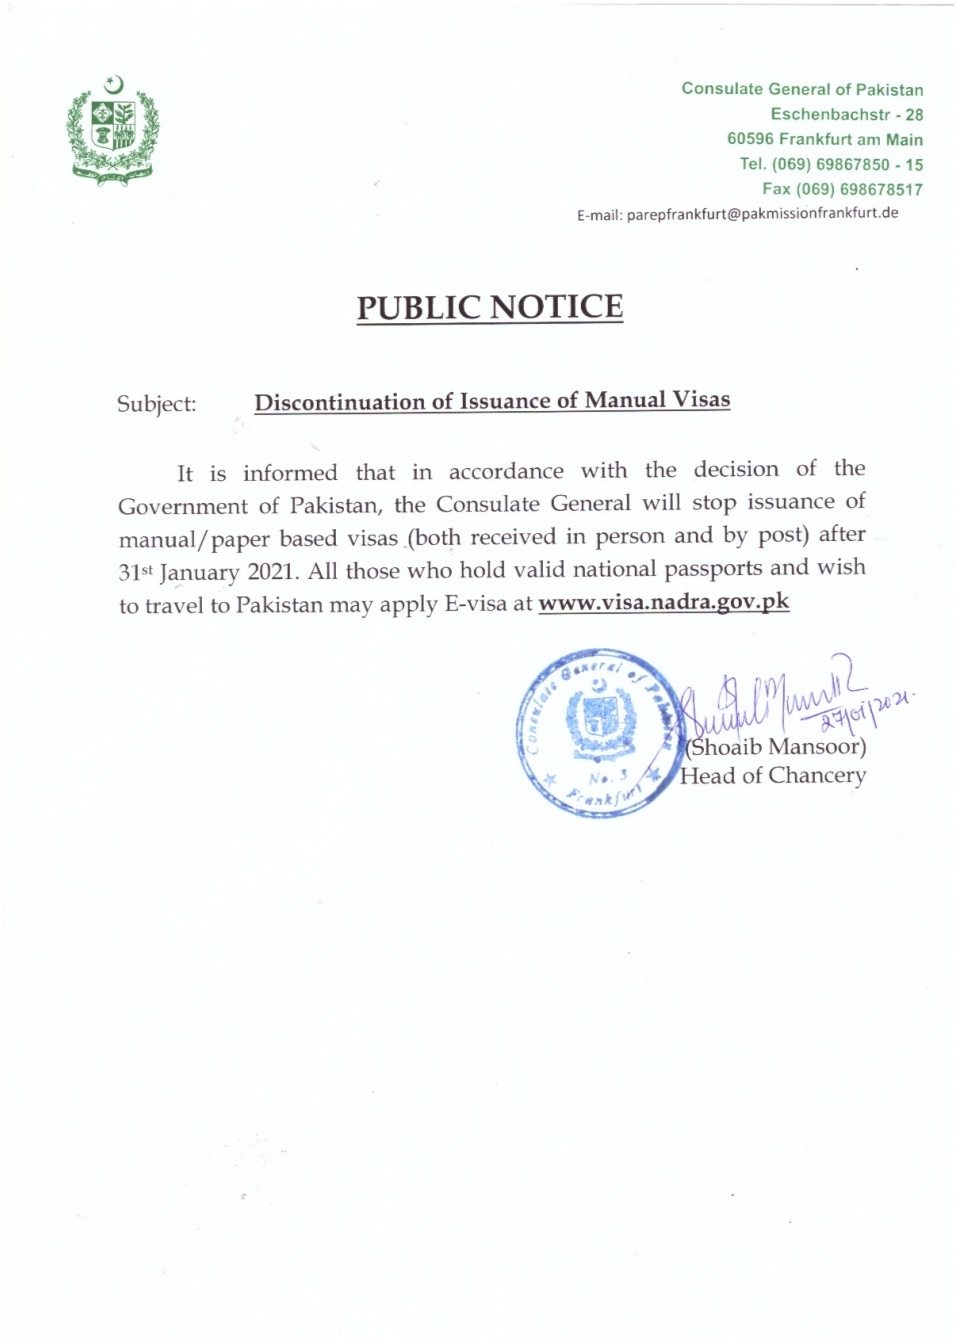 Passport Tracking – Consulate General of Islamic Republic of Pakistan